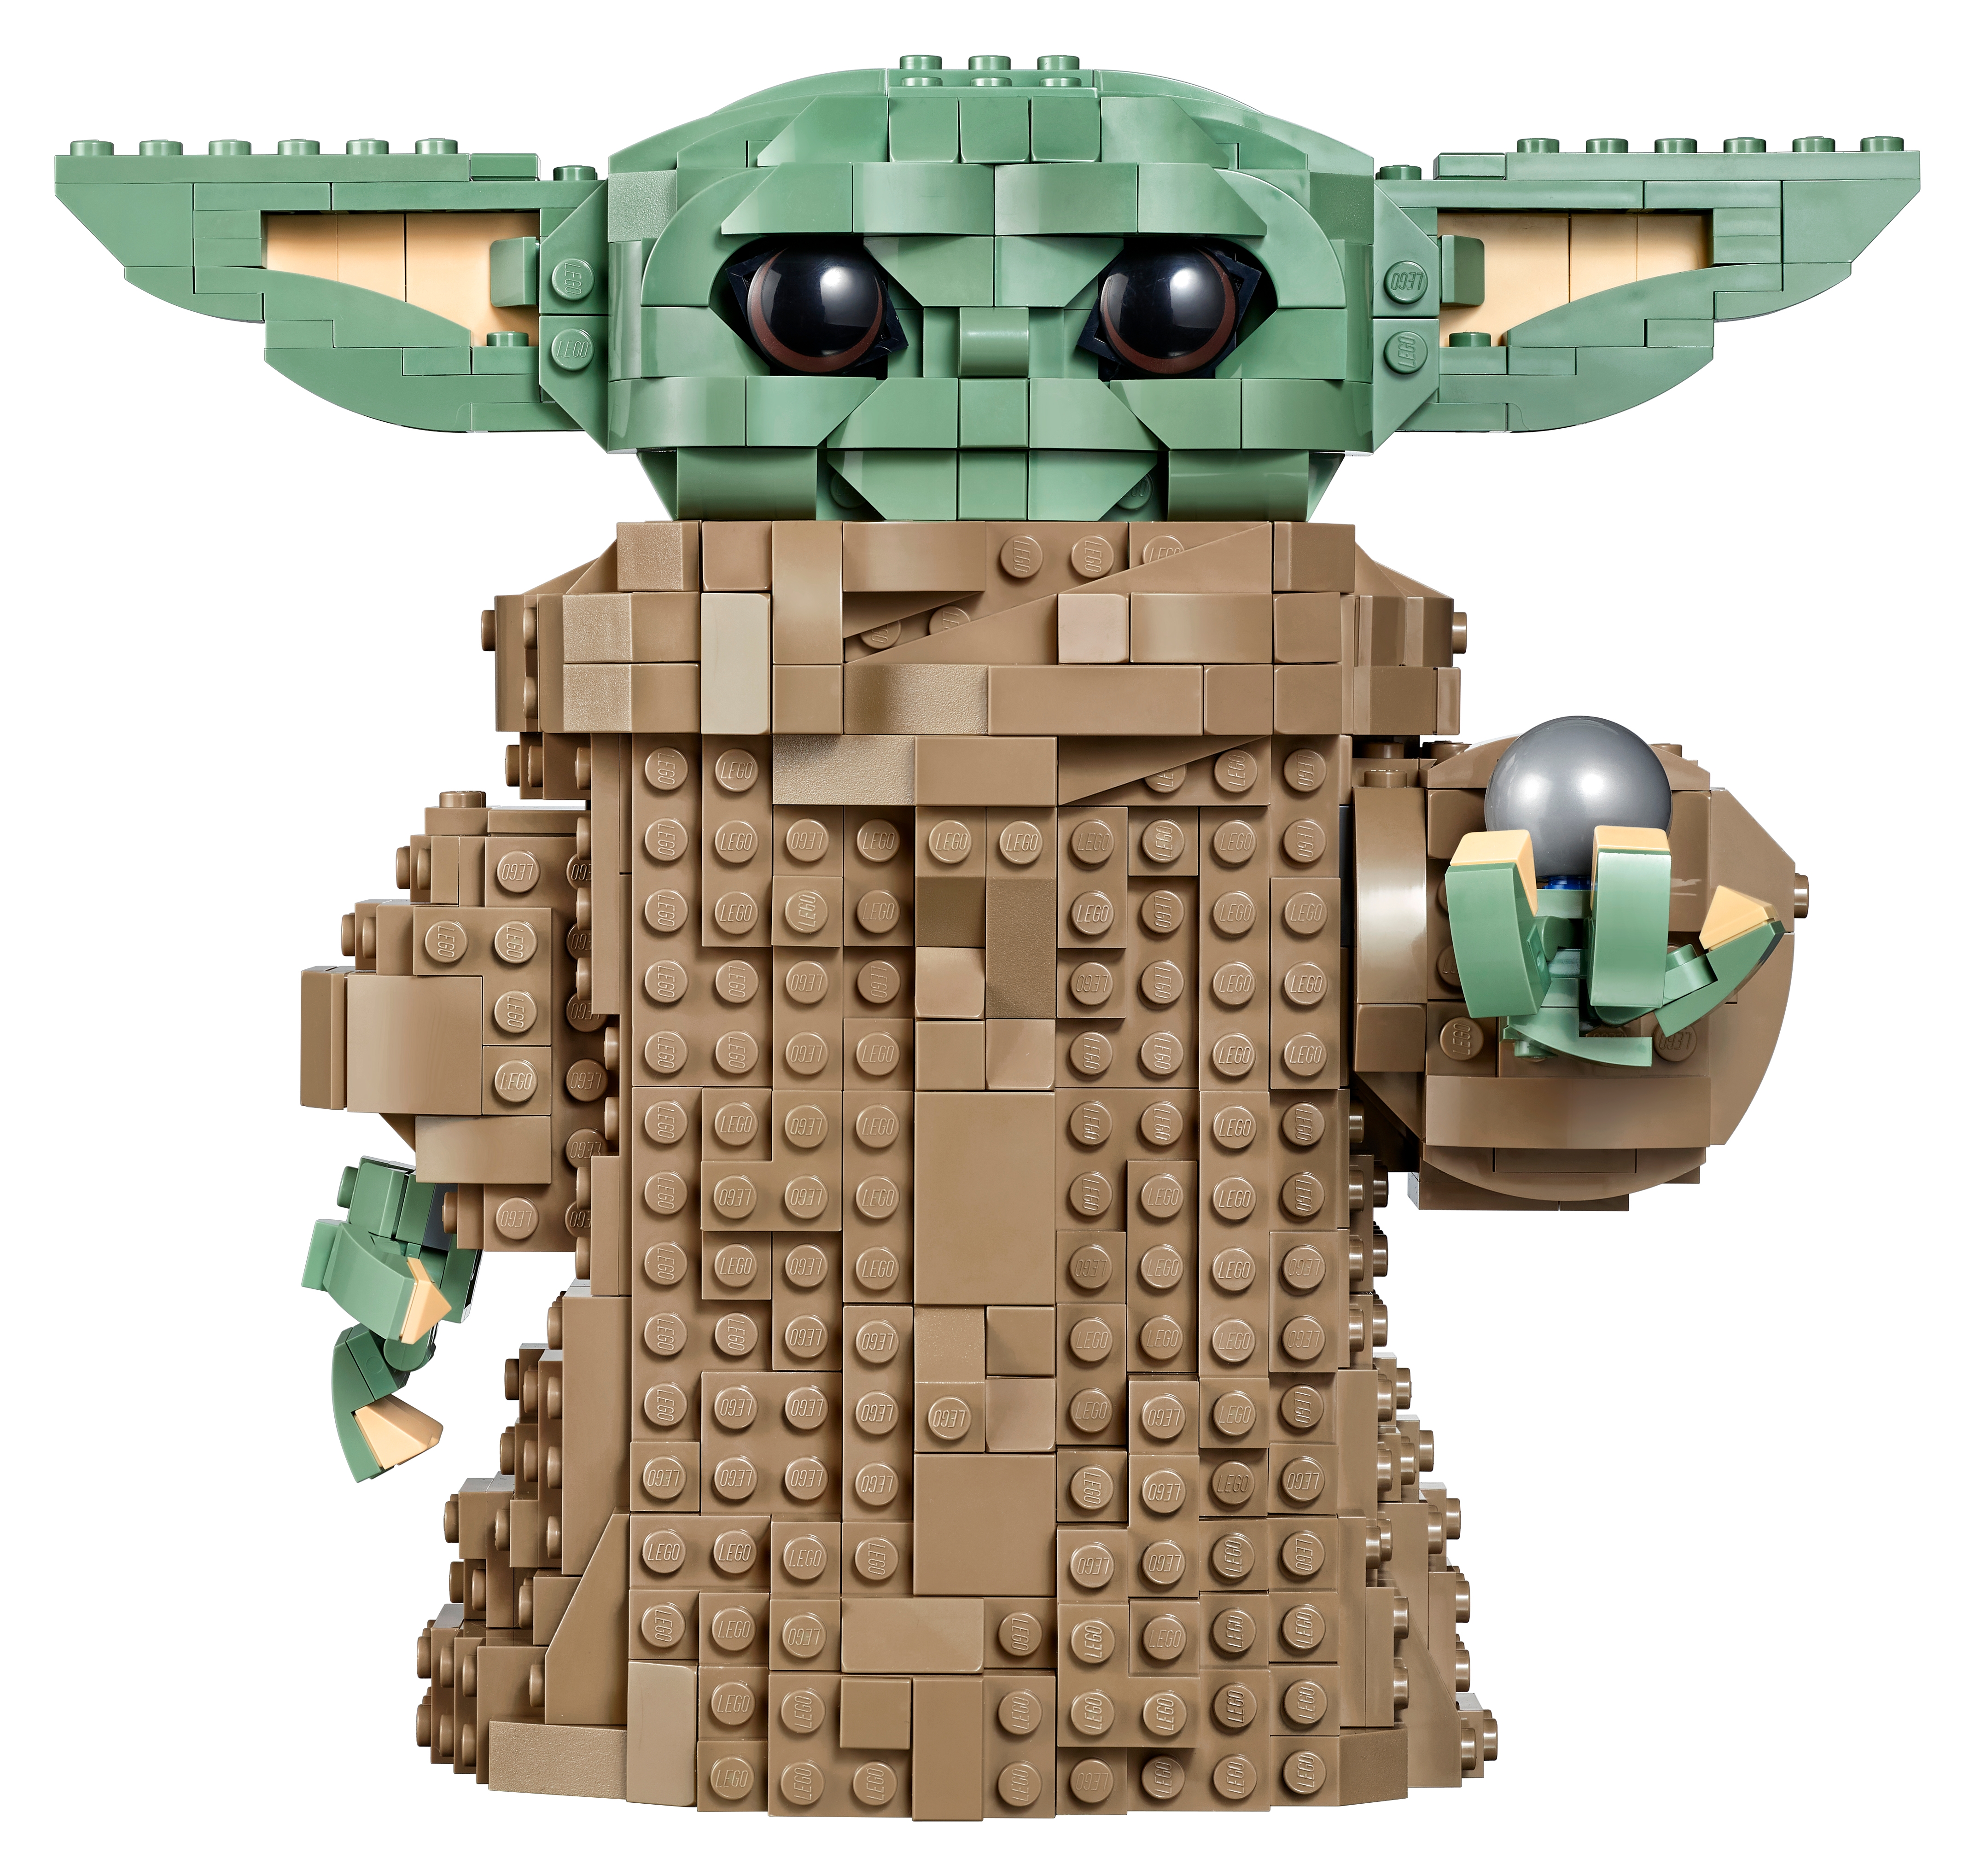 LEGO Star Wars: The Mandalorian The Child 75318 Baby Yoda Figure